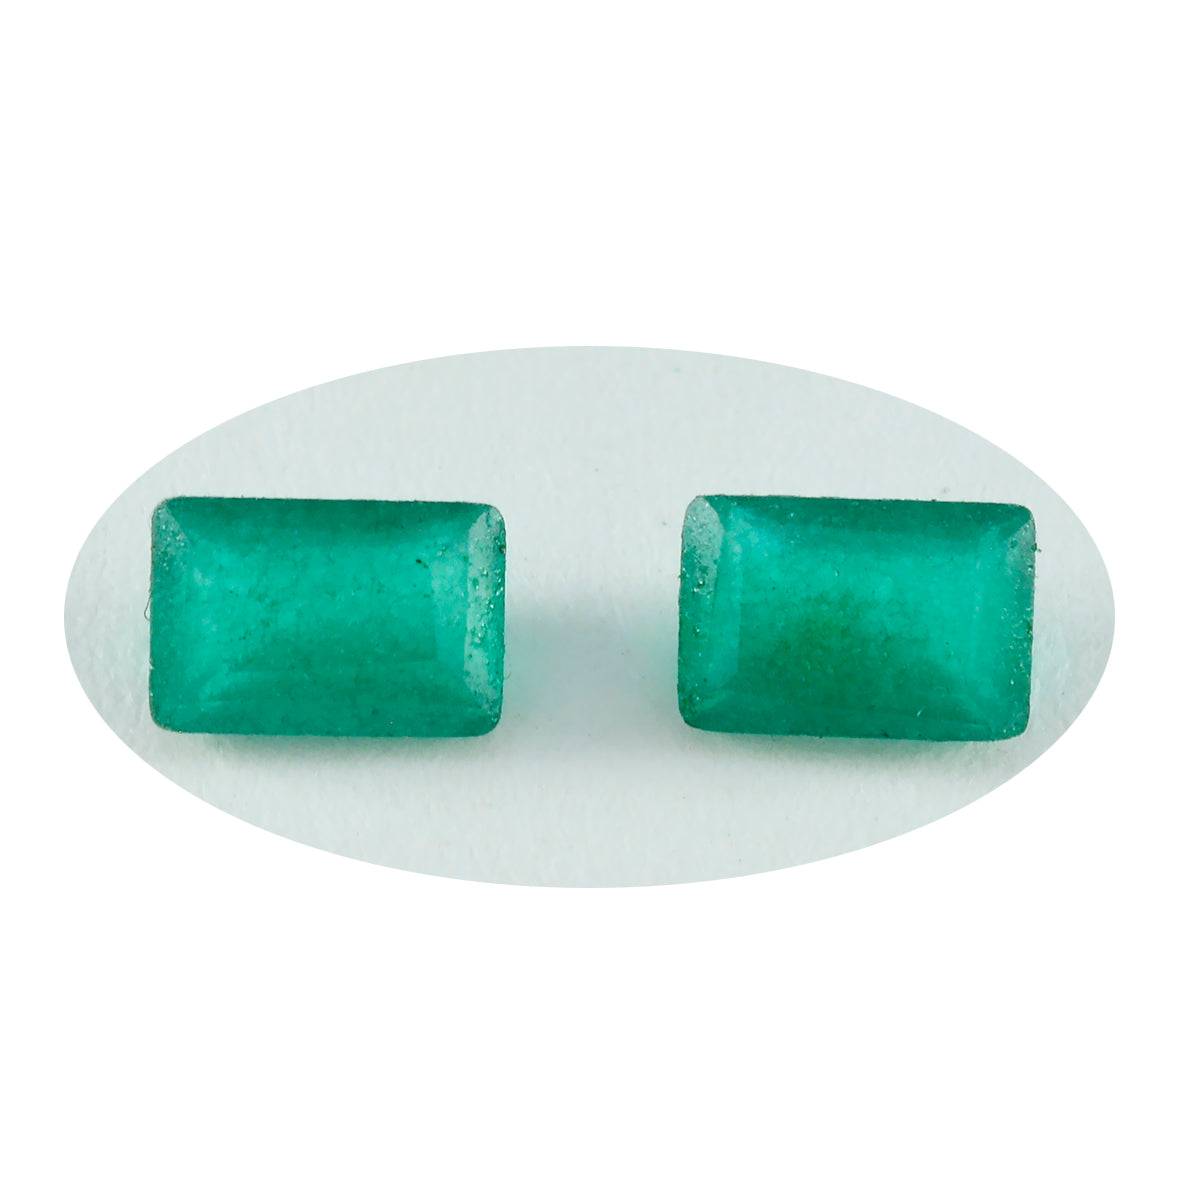 Riyogems 1PC Natural Green Jasper Faceted 9x11 mm Octagon Shape startling Quality Loose Gems